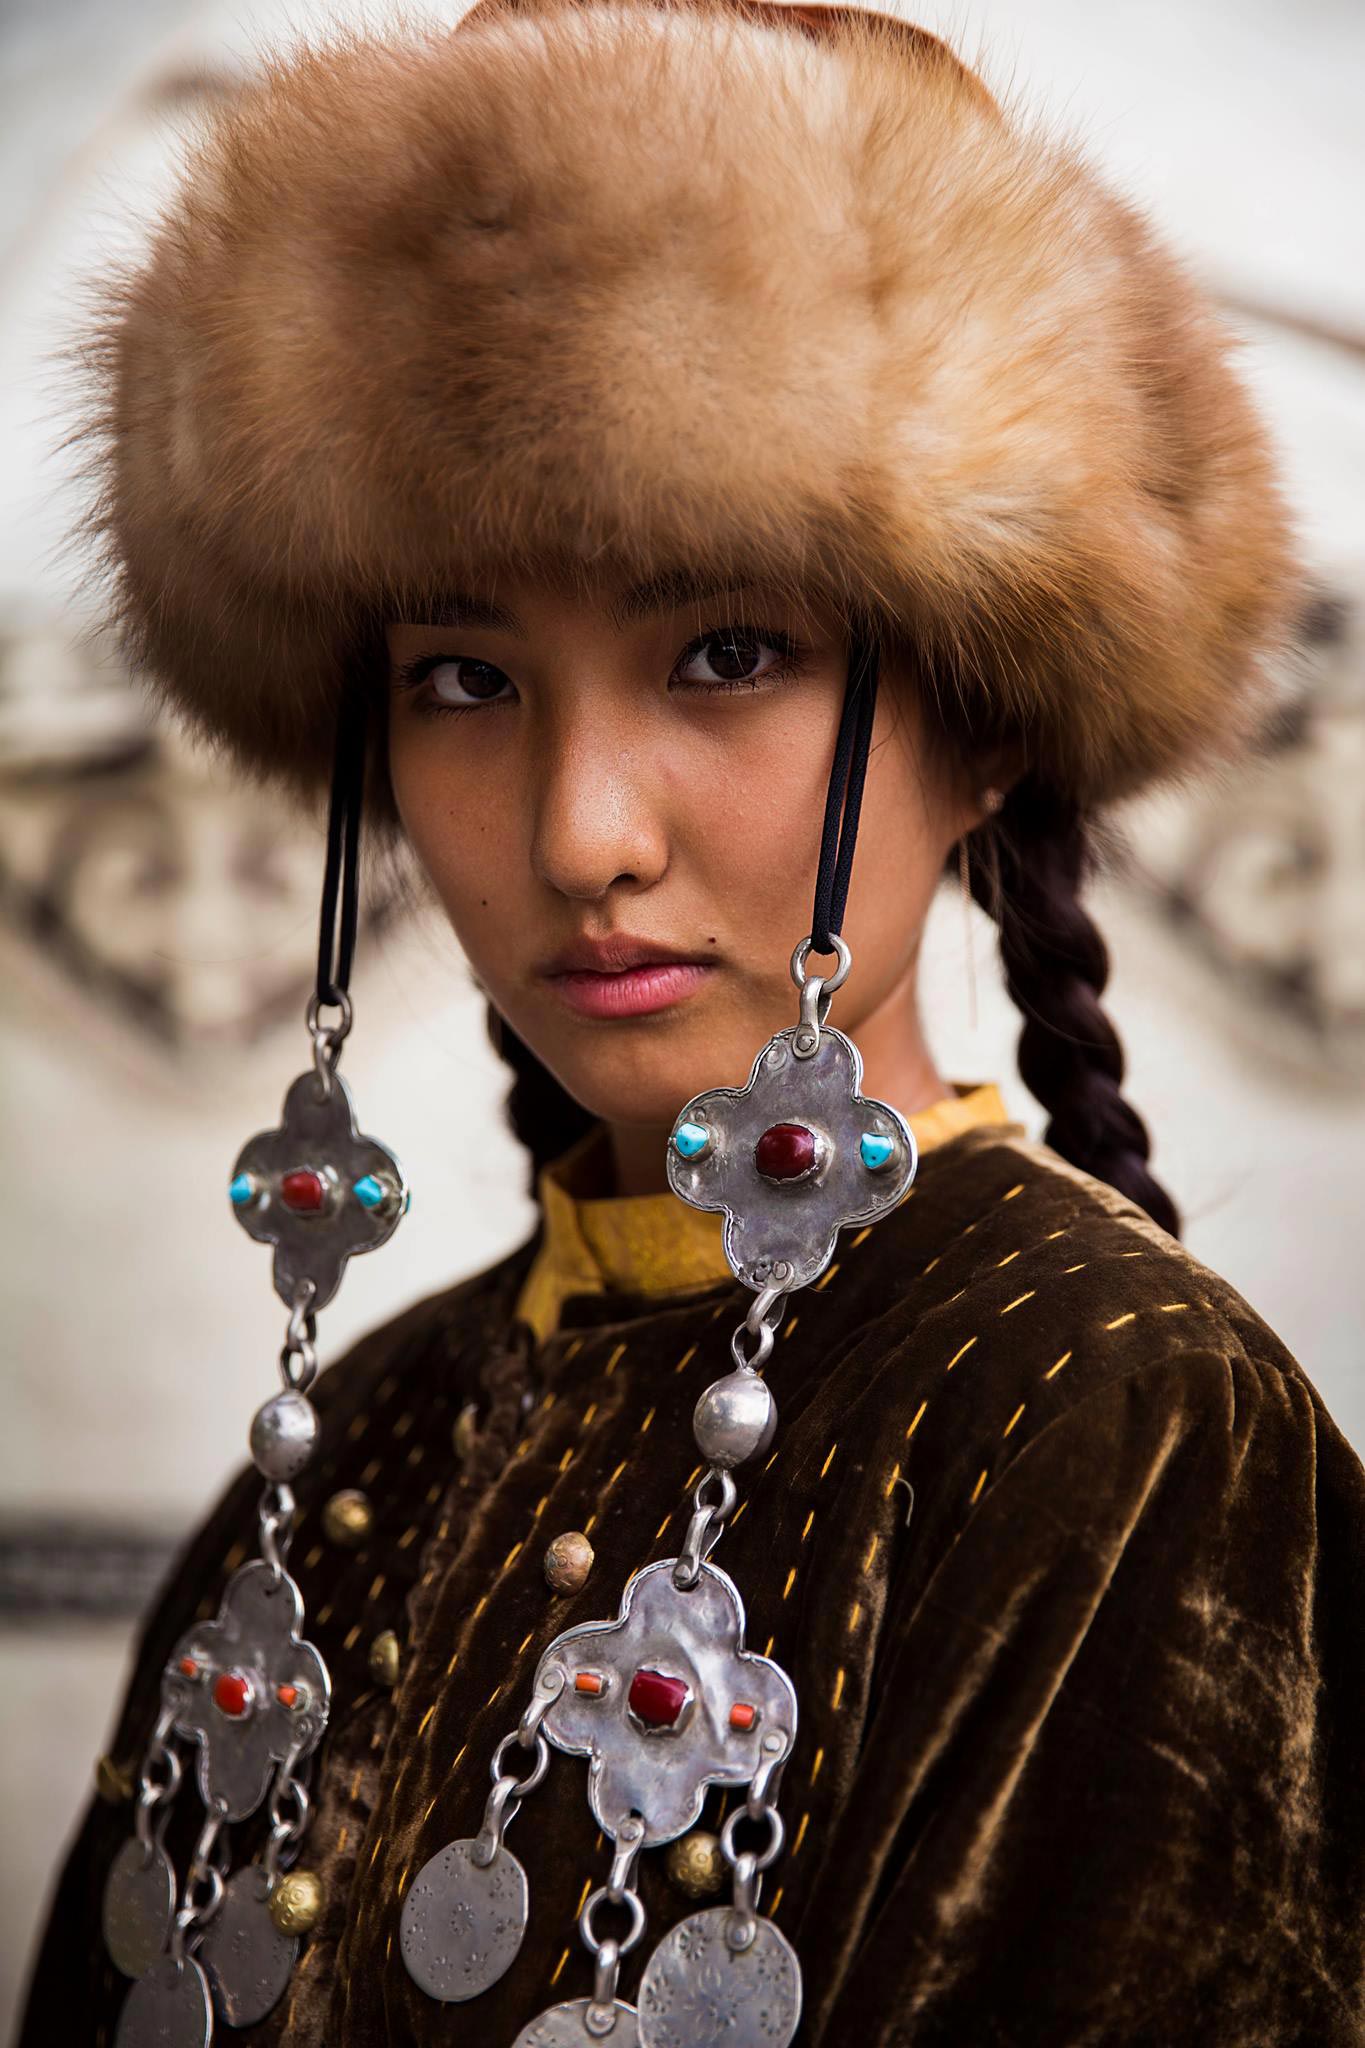 Самые красивая нация женщин. Даниэлла Ван монголка. Микаэла норок киргизка. Михаэла норок атлас красоты.